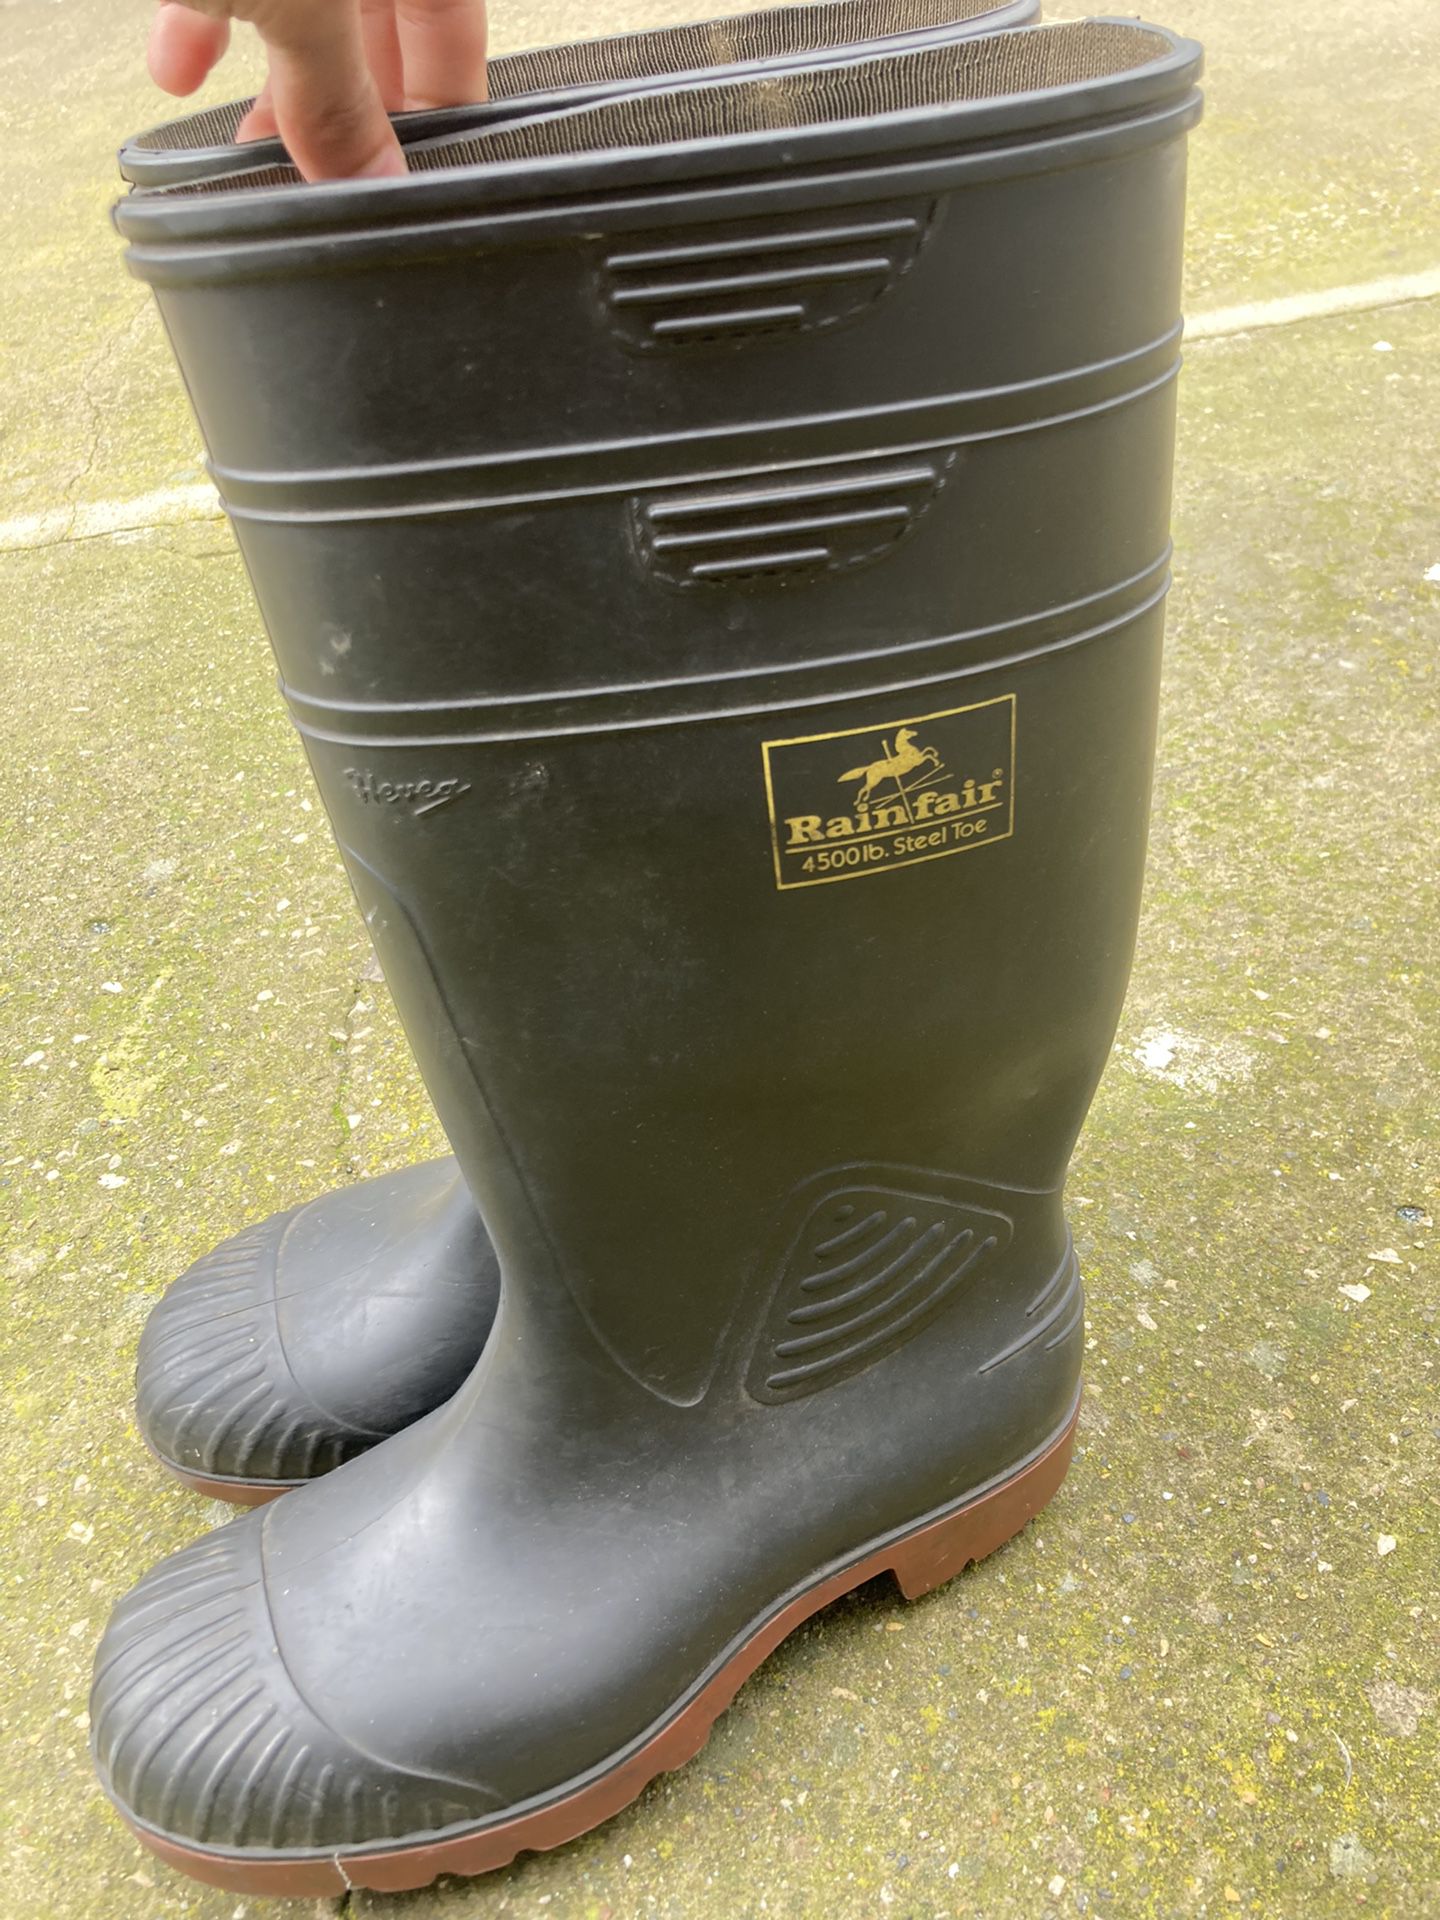 Hevea Size 8 Rain boots 